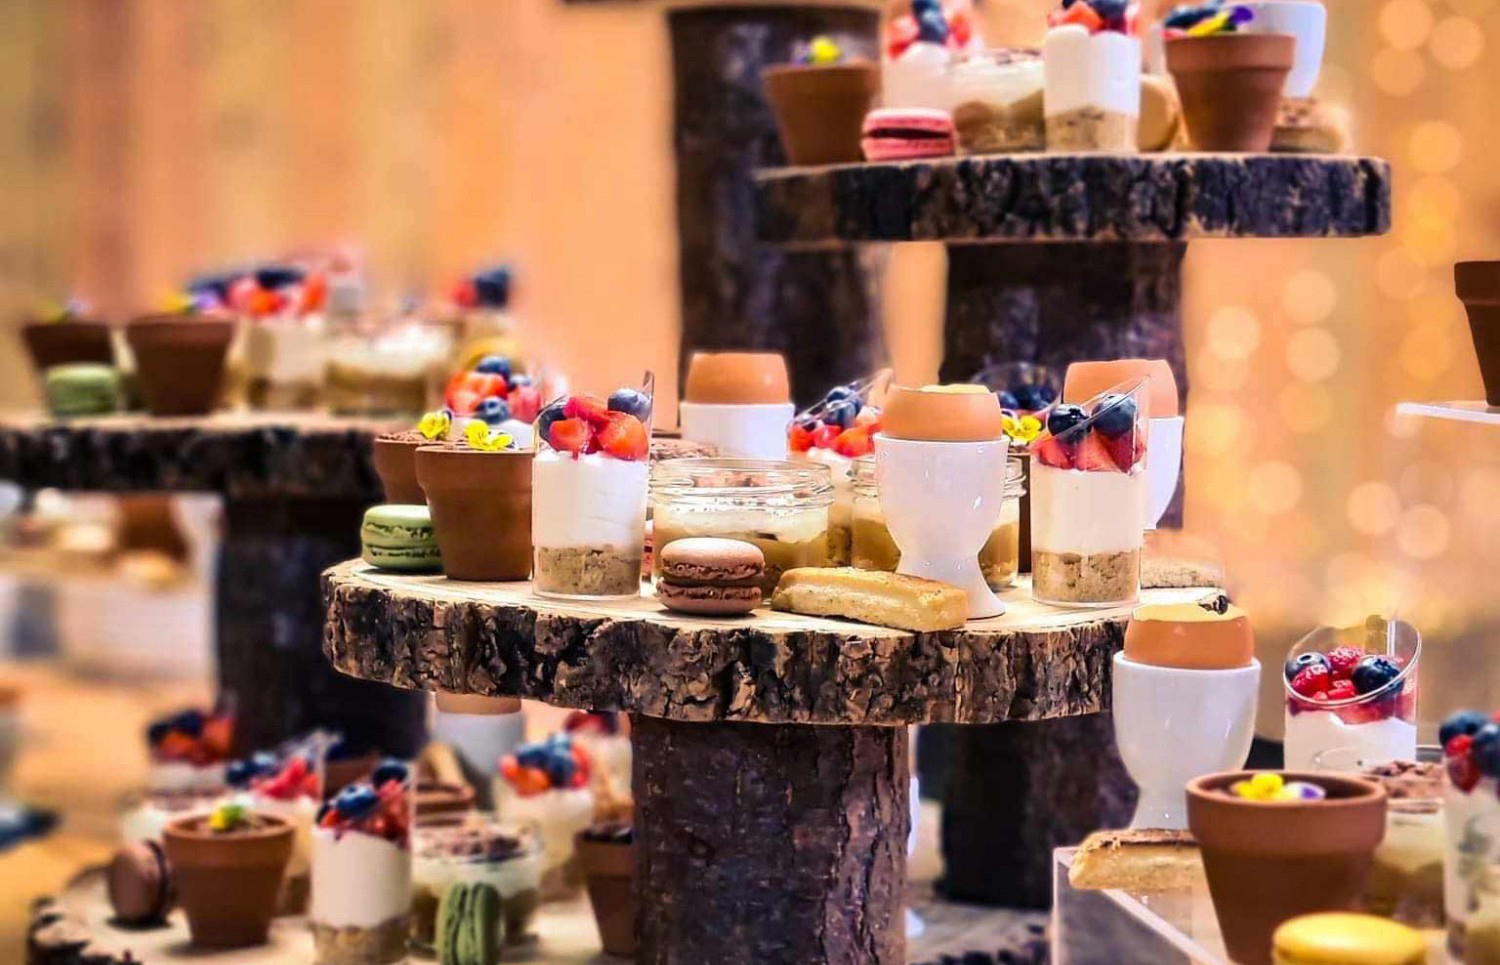 Desserts on log display